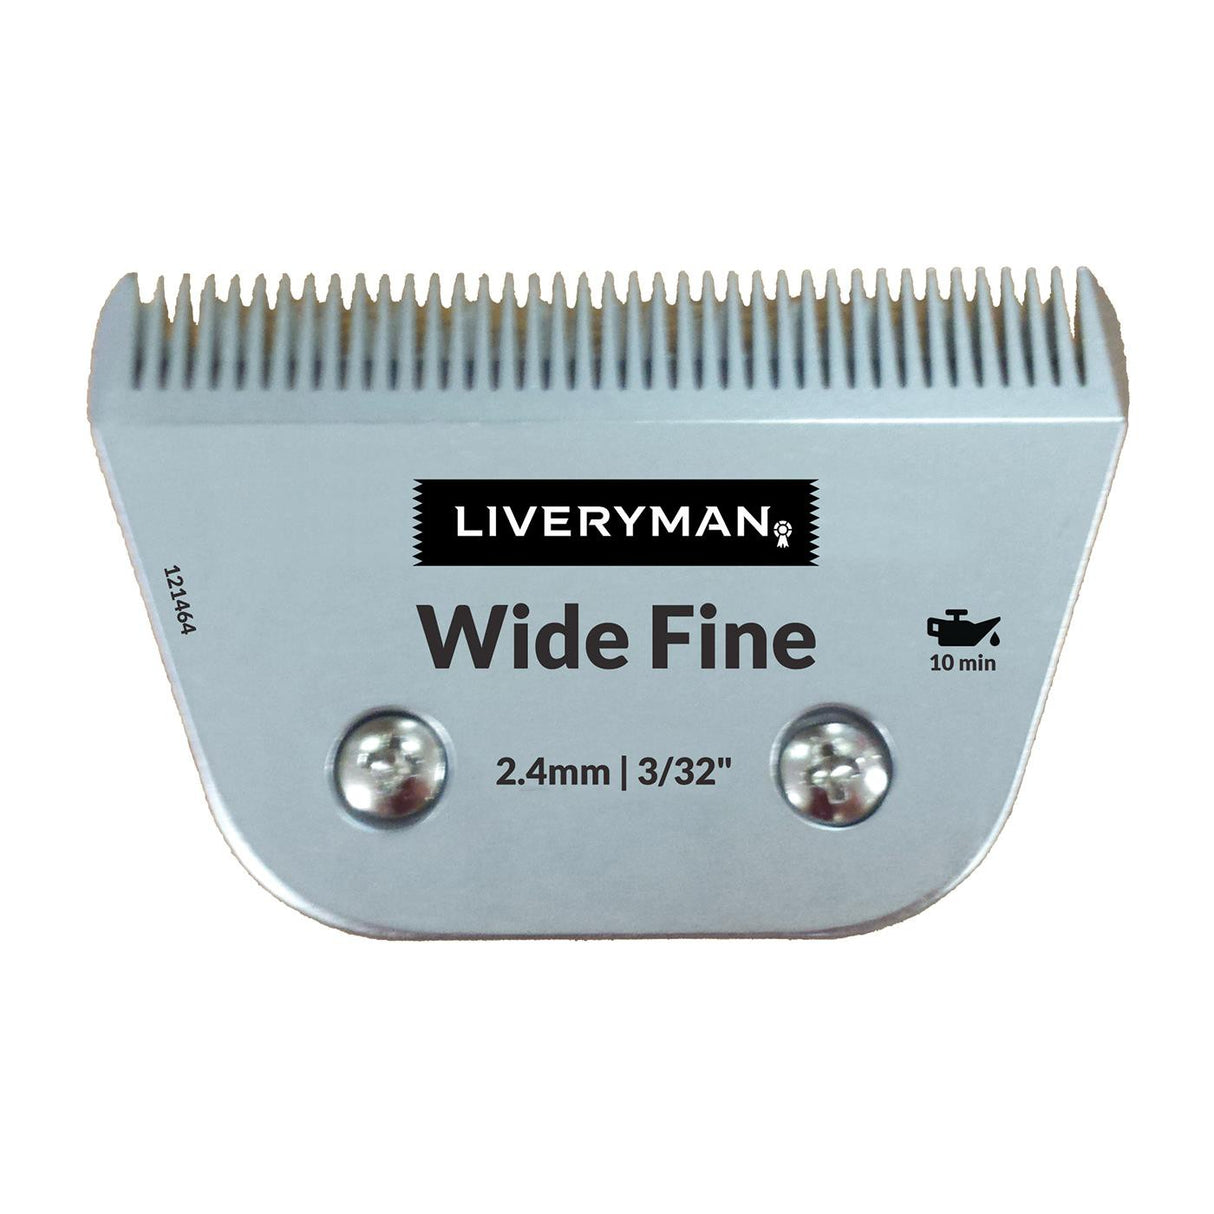 Liveryman Cutter & Comb Wide Fine T84/2.4mm Blade